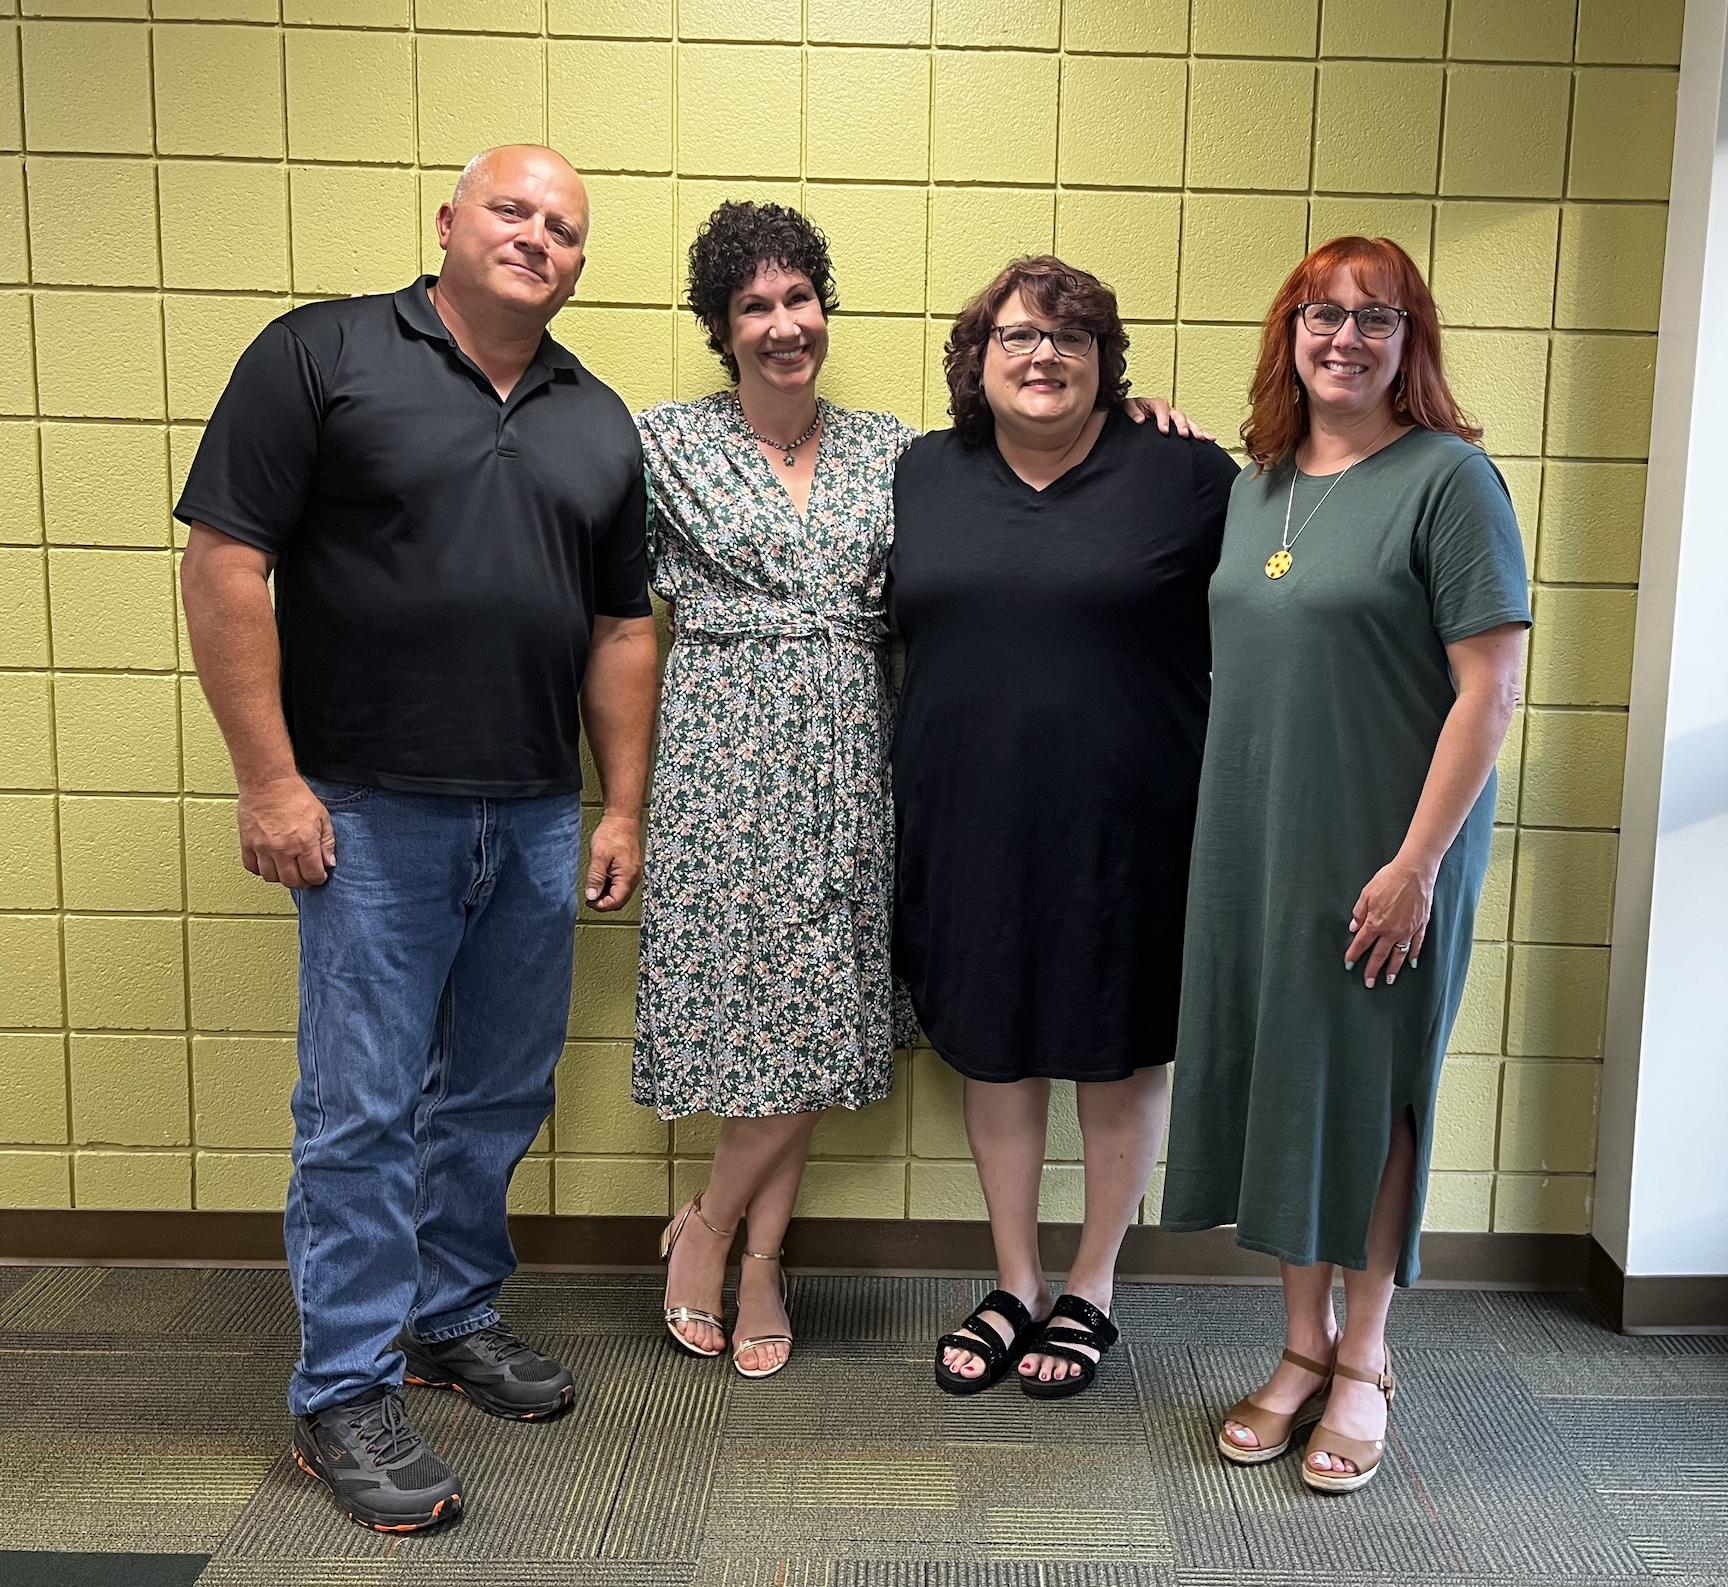 Mr. Crovak, Mrs. Inglese, Mrs. Kelly-Garris and Mrs. Skoretz attended the June 13, 2022 school board meeting